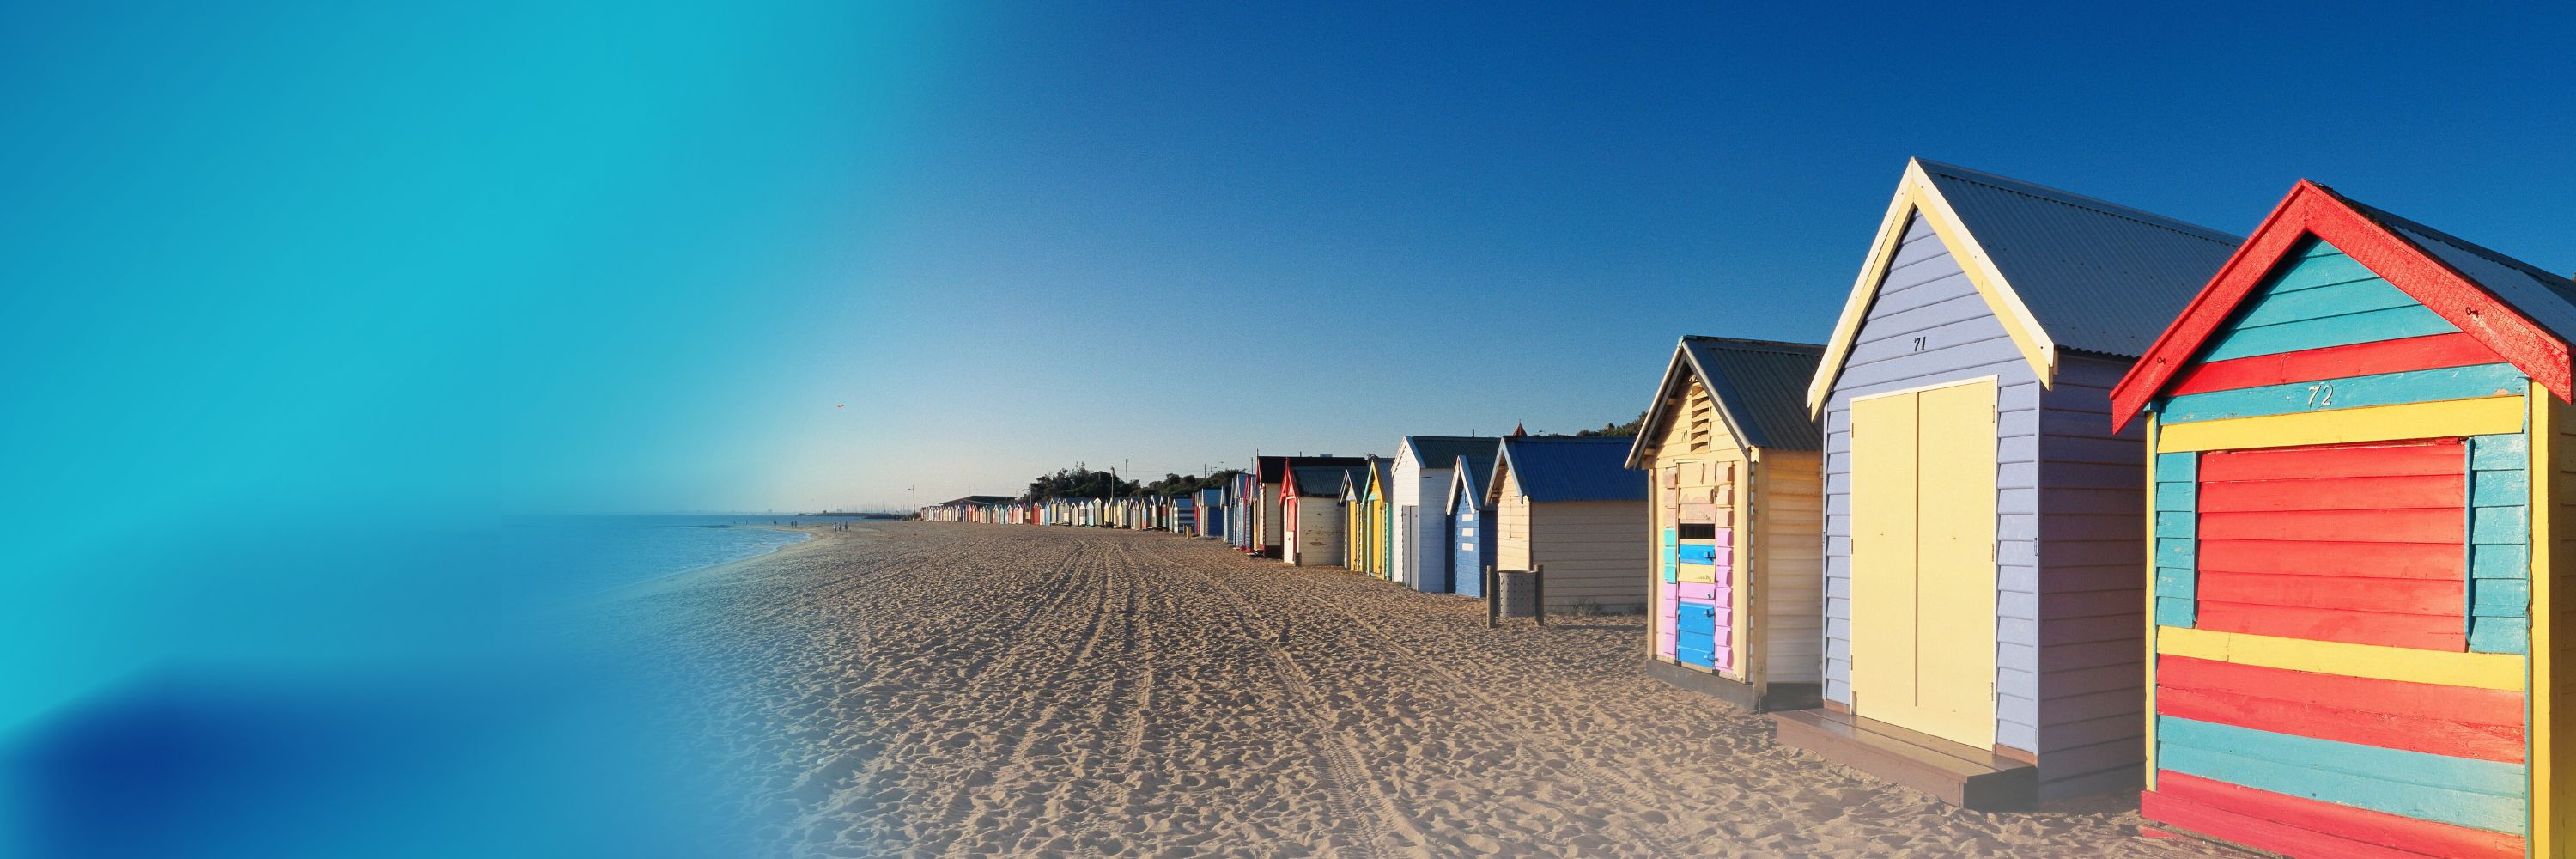 image depicting colourful beach huts at brighton beach, victoria